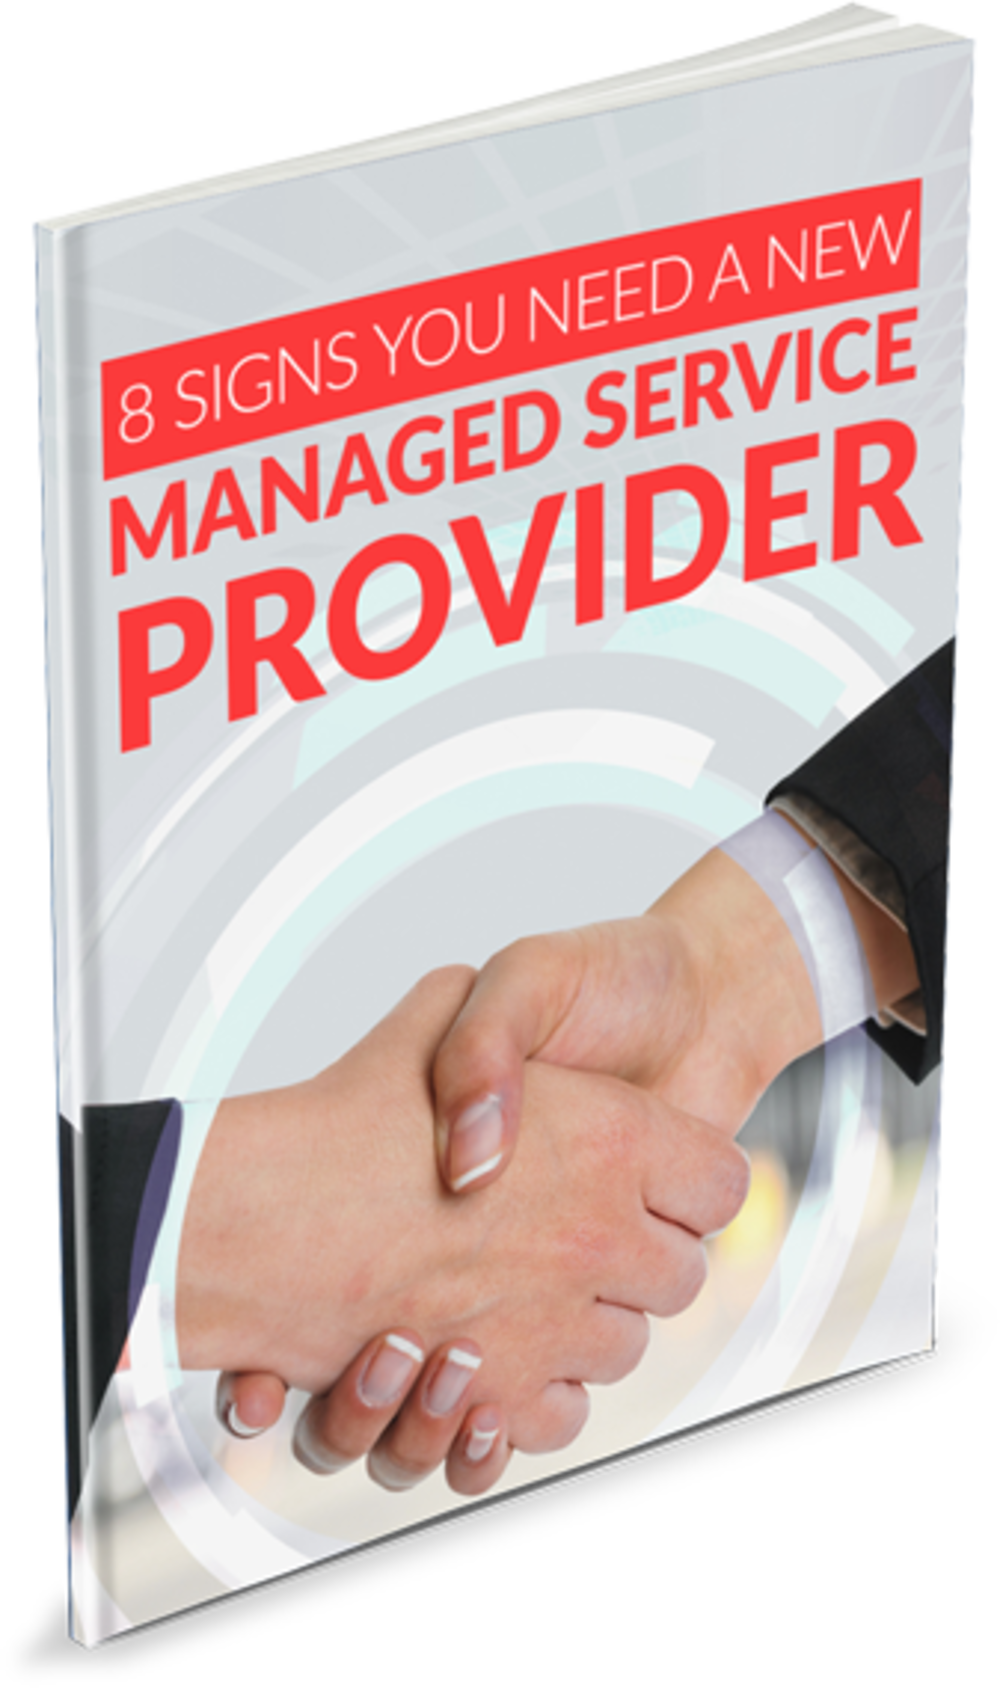 managed service provider ebook guide